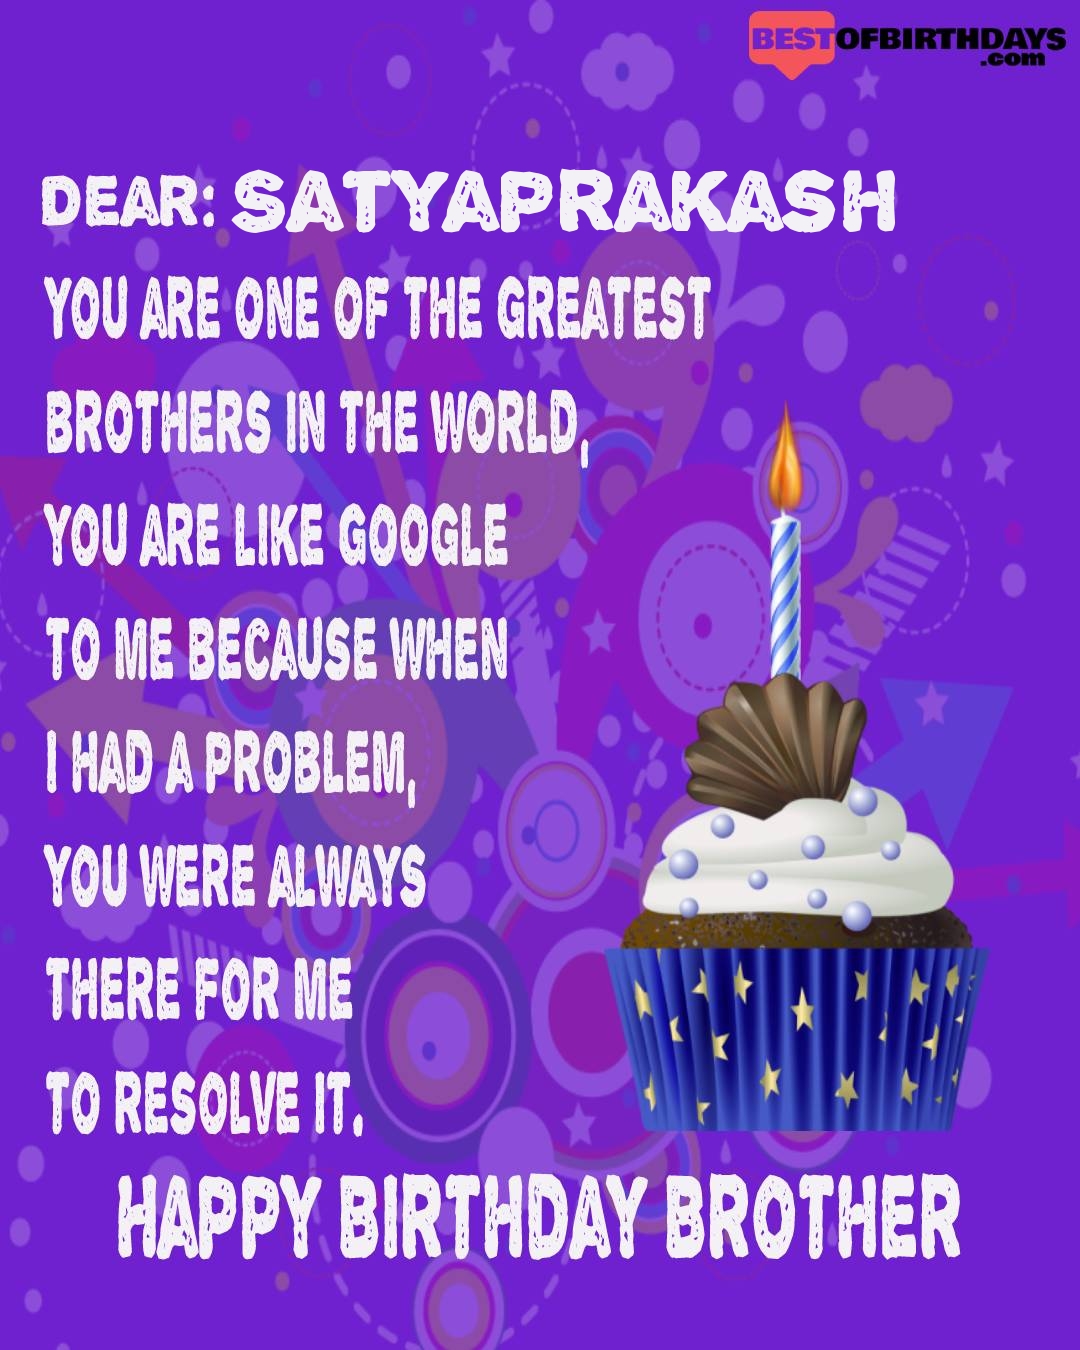 Happy birthday satyaprakash bhai brother bro